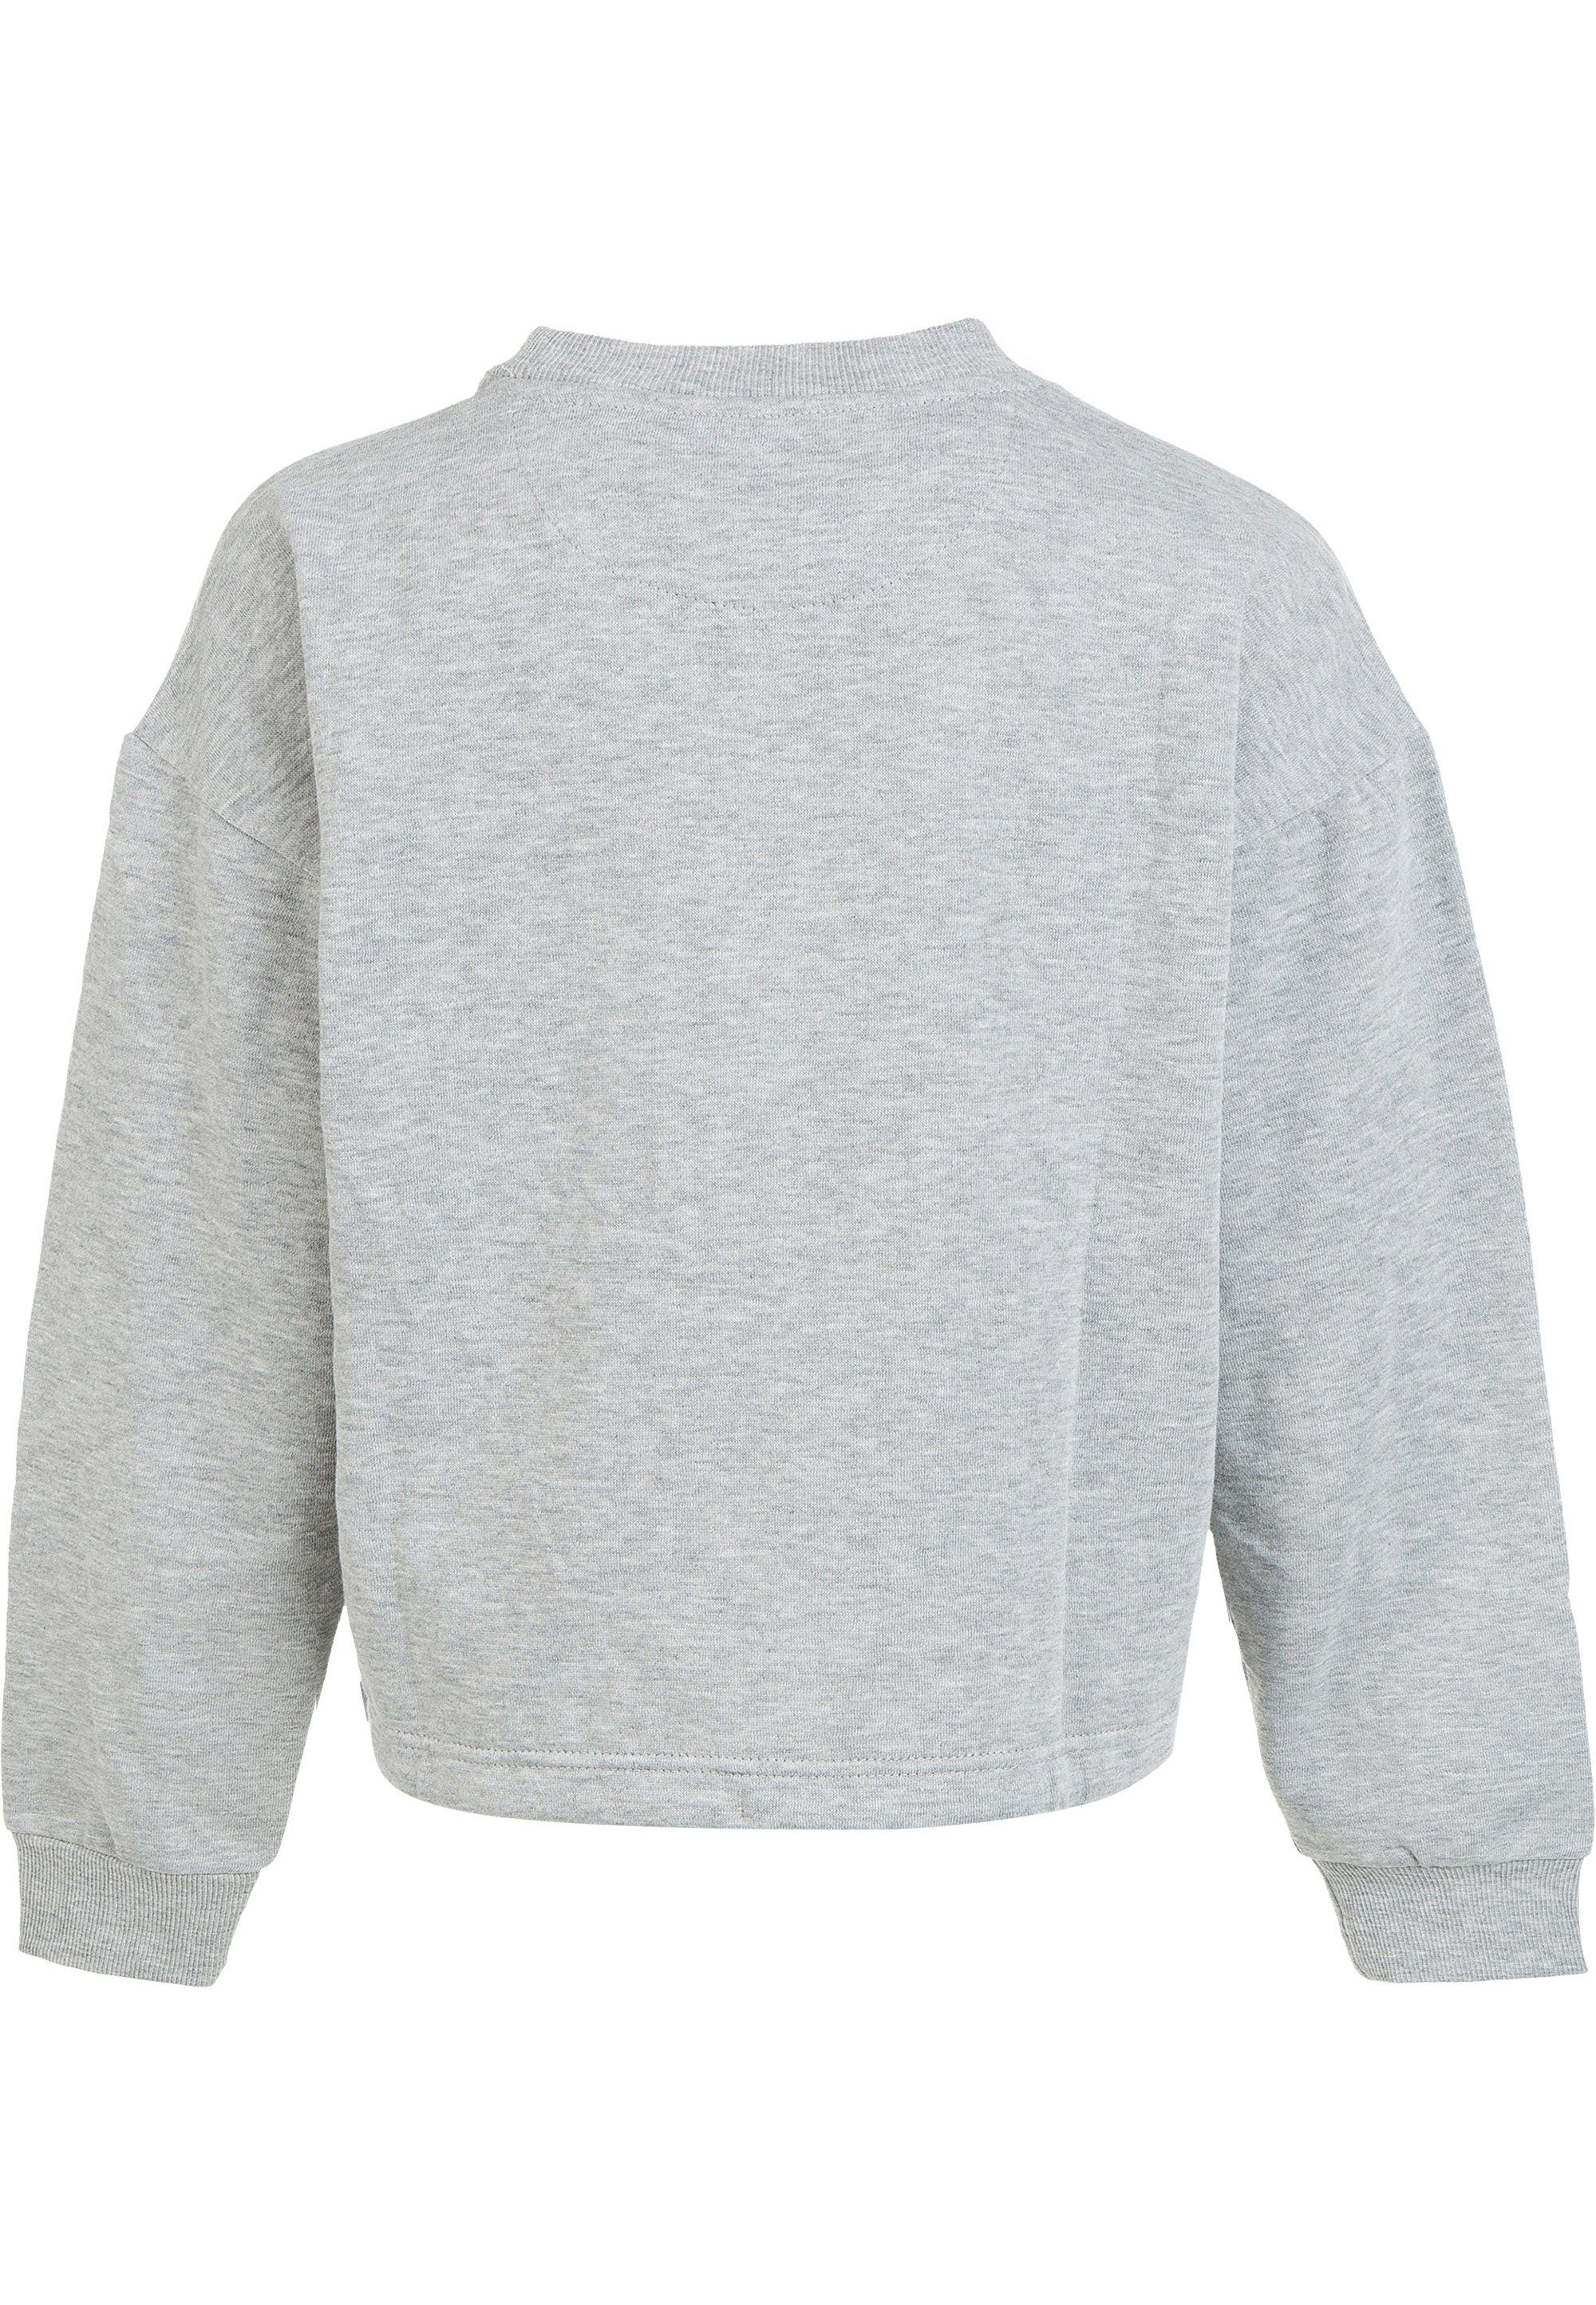 ENDURANCE Sweatshirt hellgrau mit Torowa atmungsaktiver Funktion